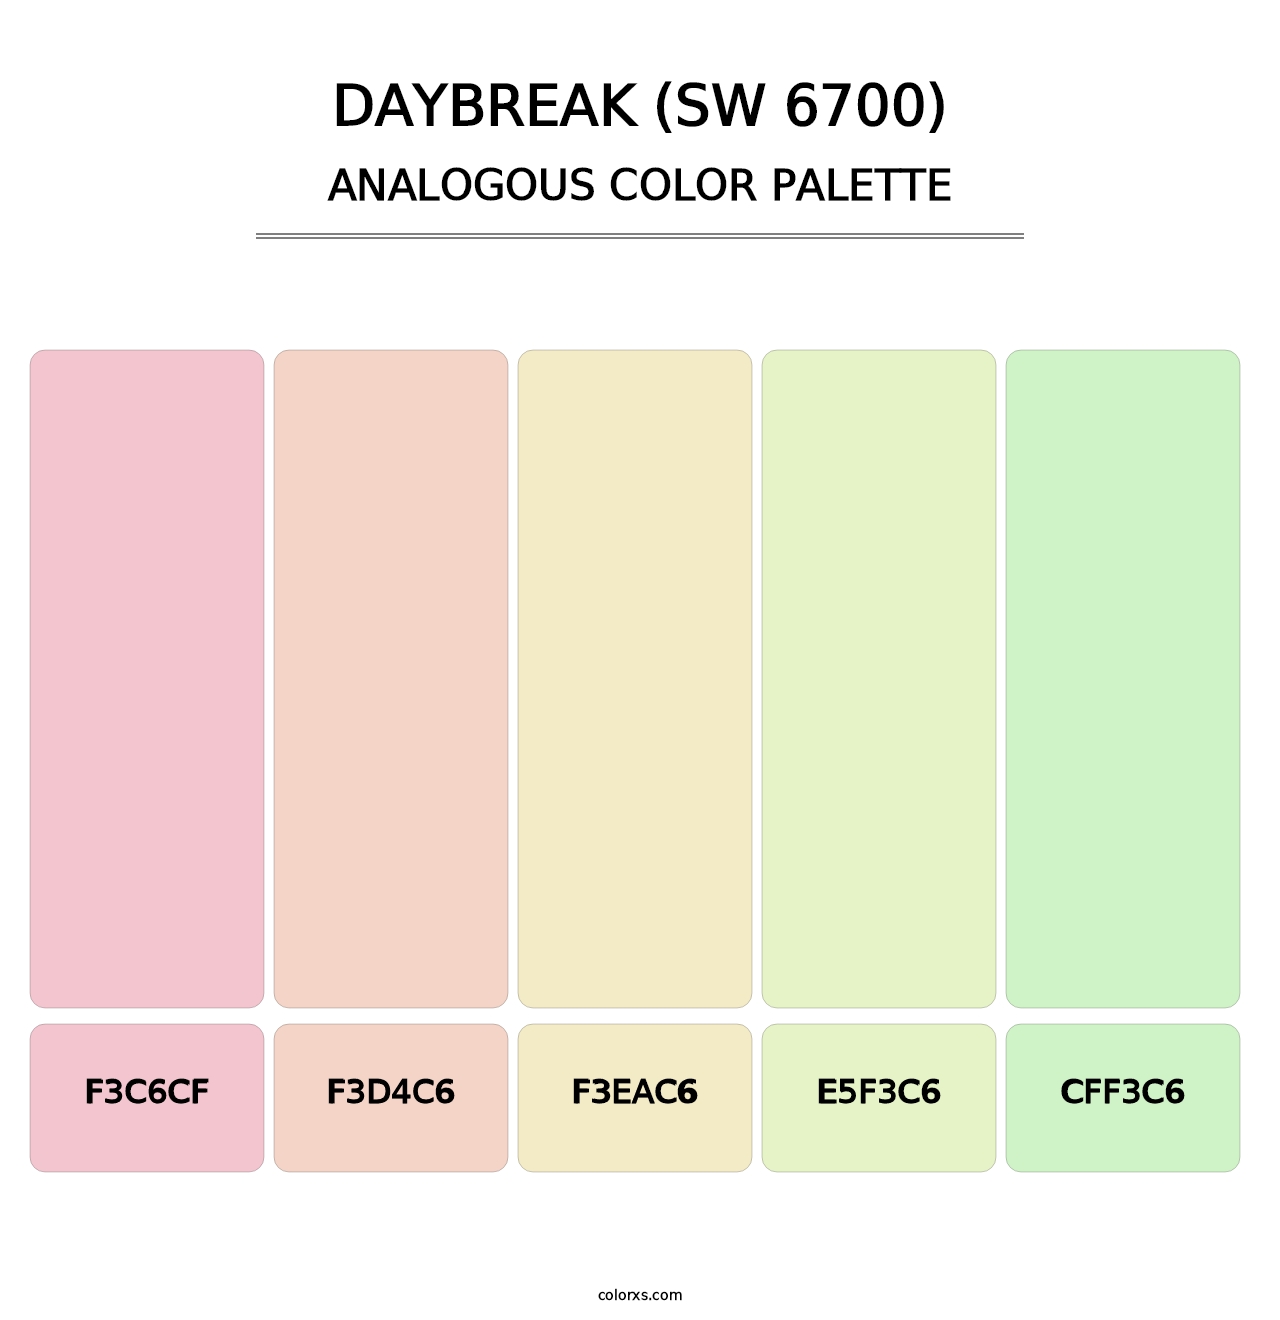 Daybreak (SW 6700) - Analogous Color Palette